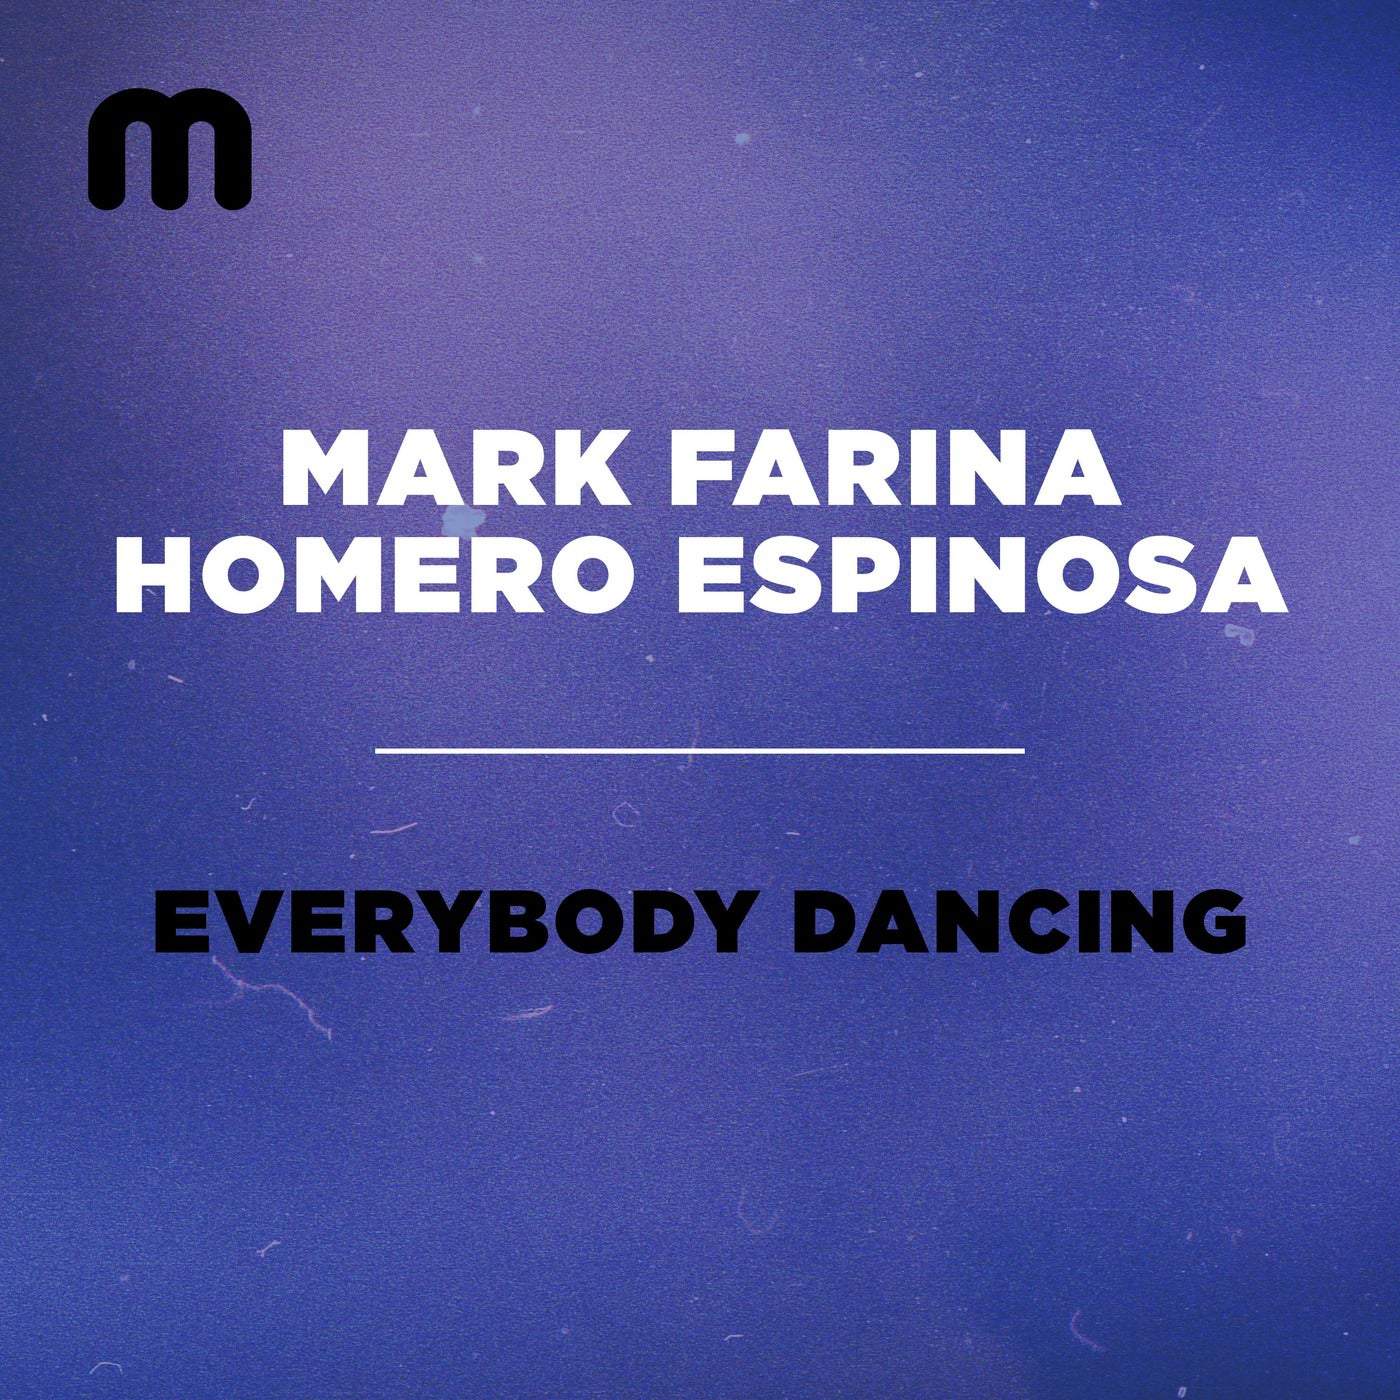 image cover: Mark Farina, Homero Espinosa - Everybody Dancing on Moulton Music